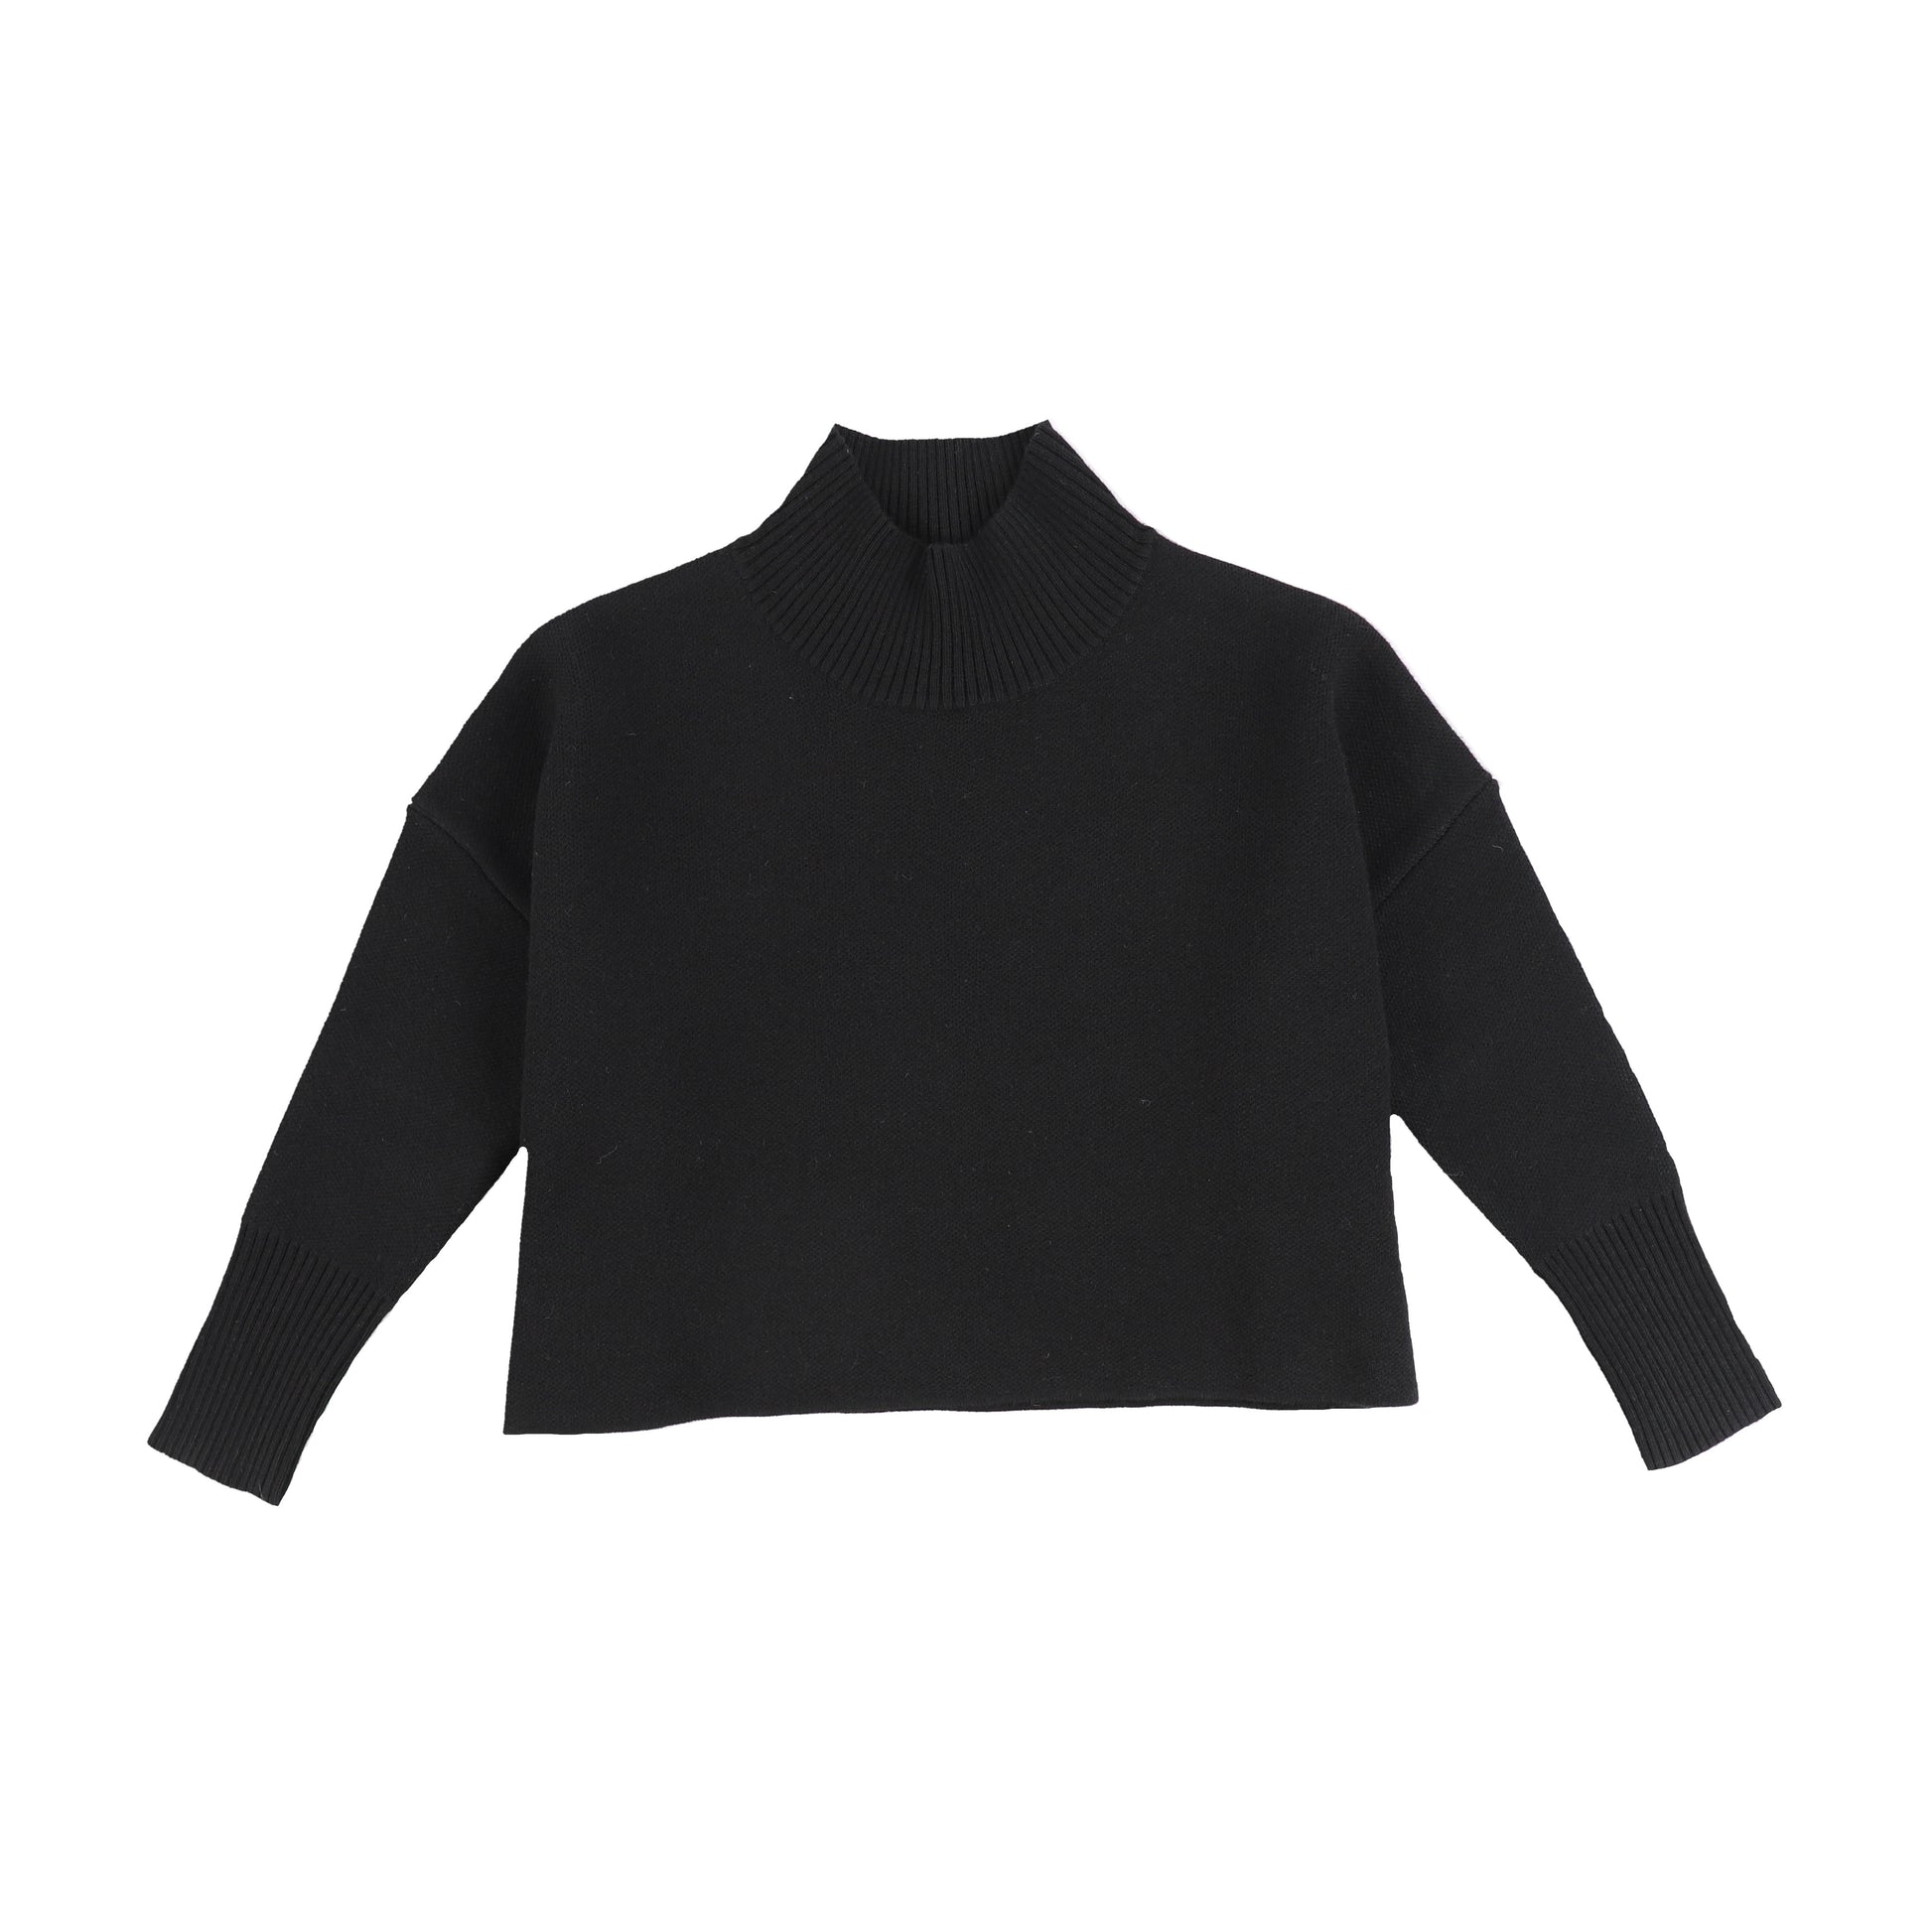 Bamboo Original Black Knit Cropped Turtleneck Sweater [Final Sale